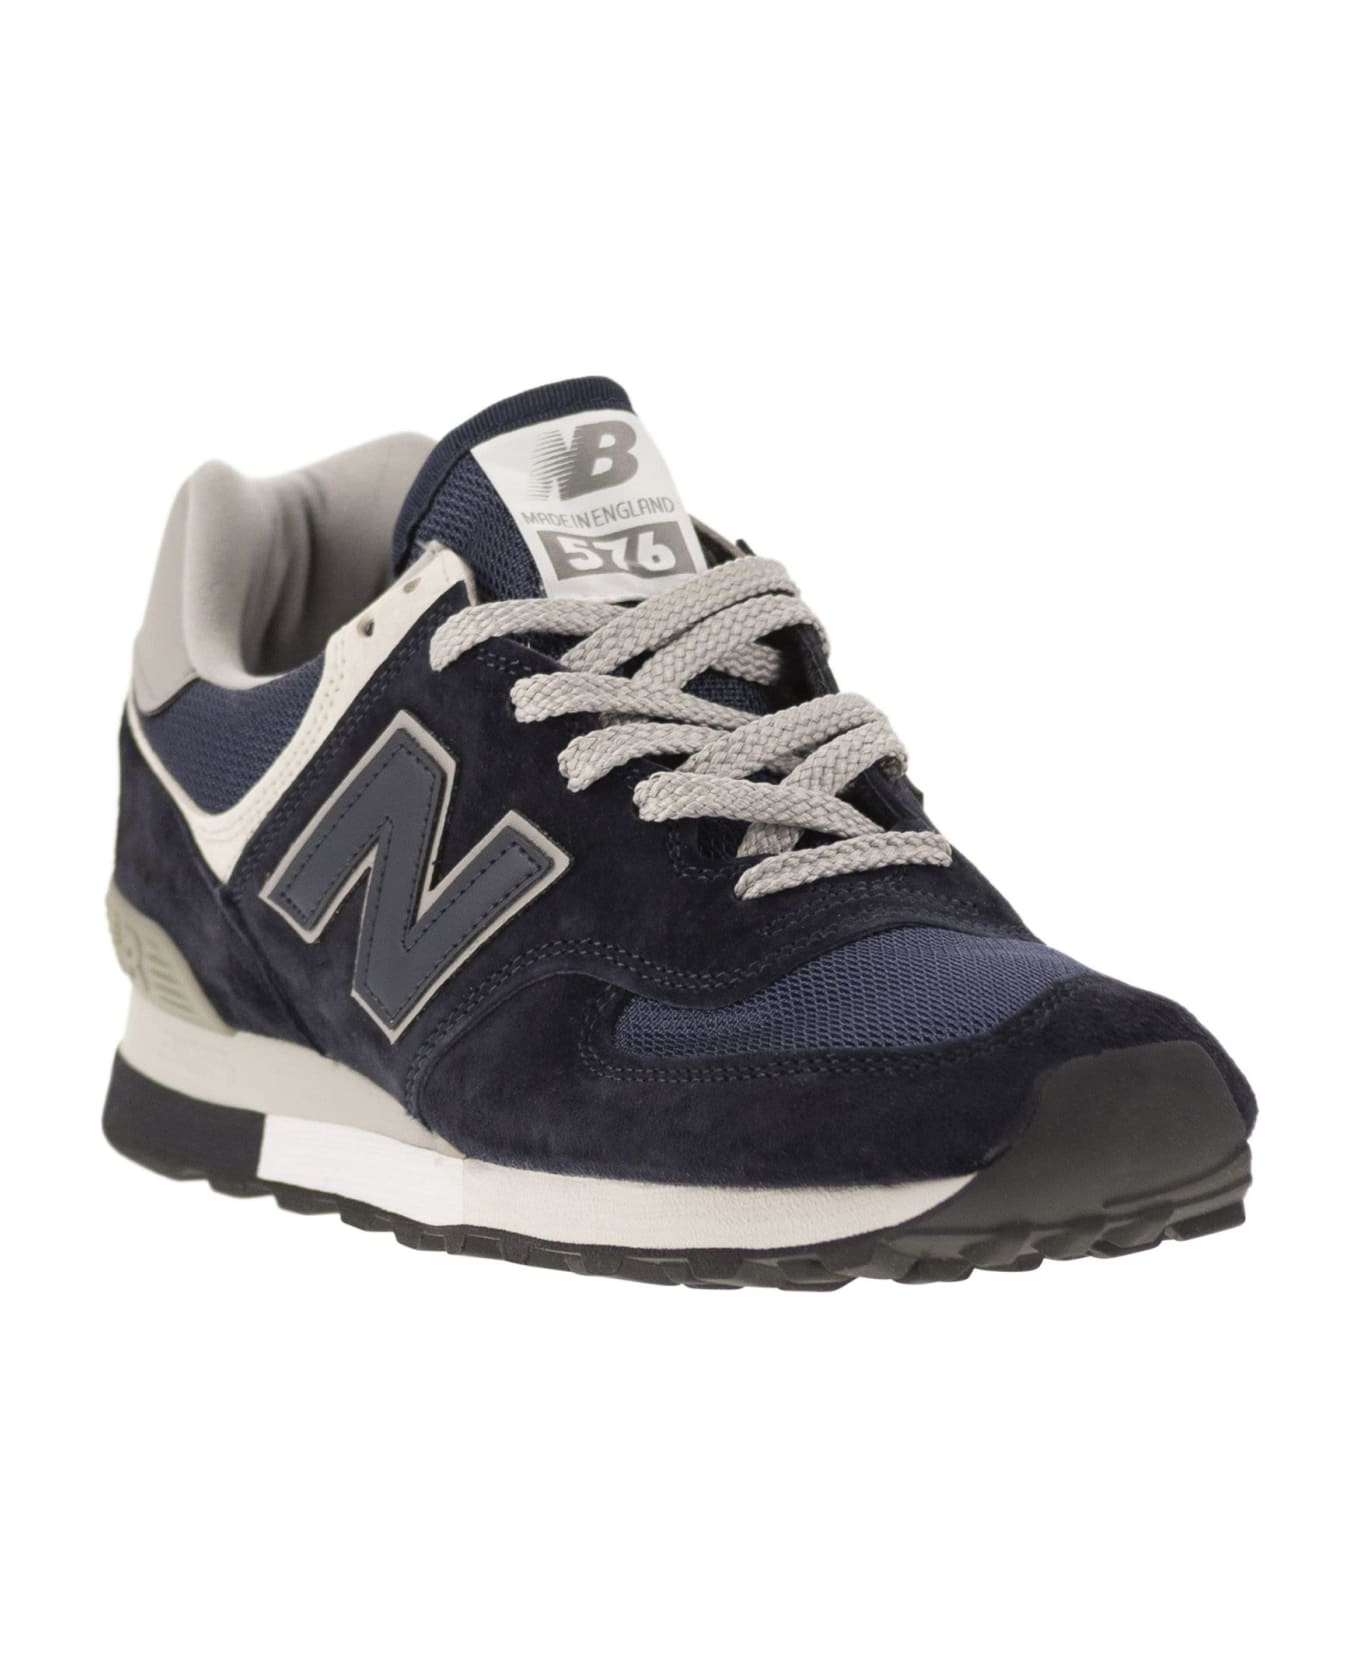 New Balance 576 - Sneakers - Navy